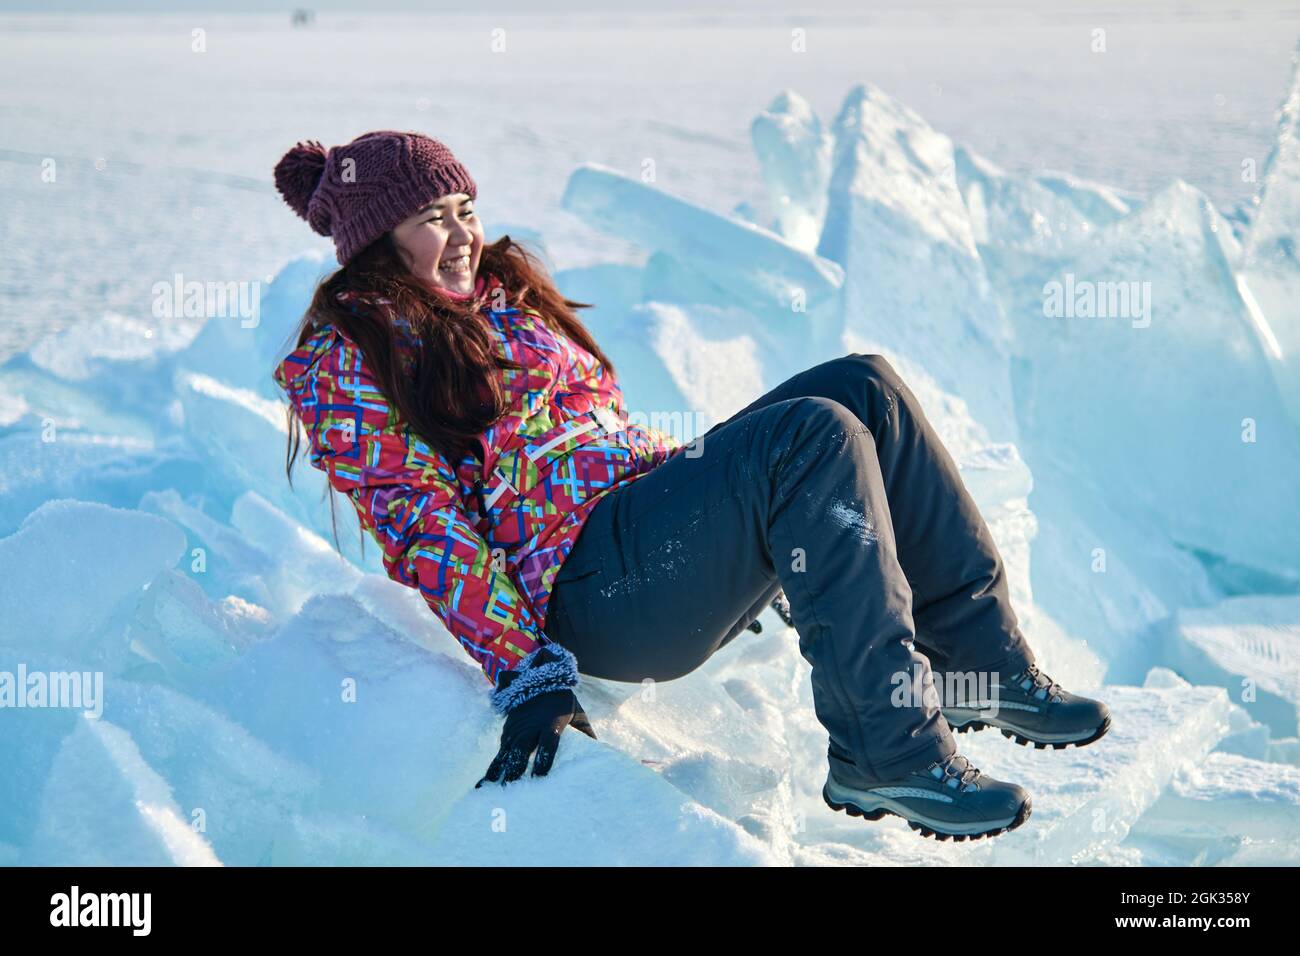 A woman in a ski suit climbs on blocks of ice, fun, fun, rest, winter Stock Photo